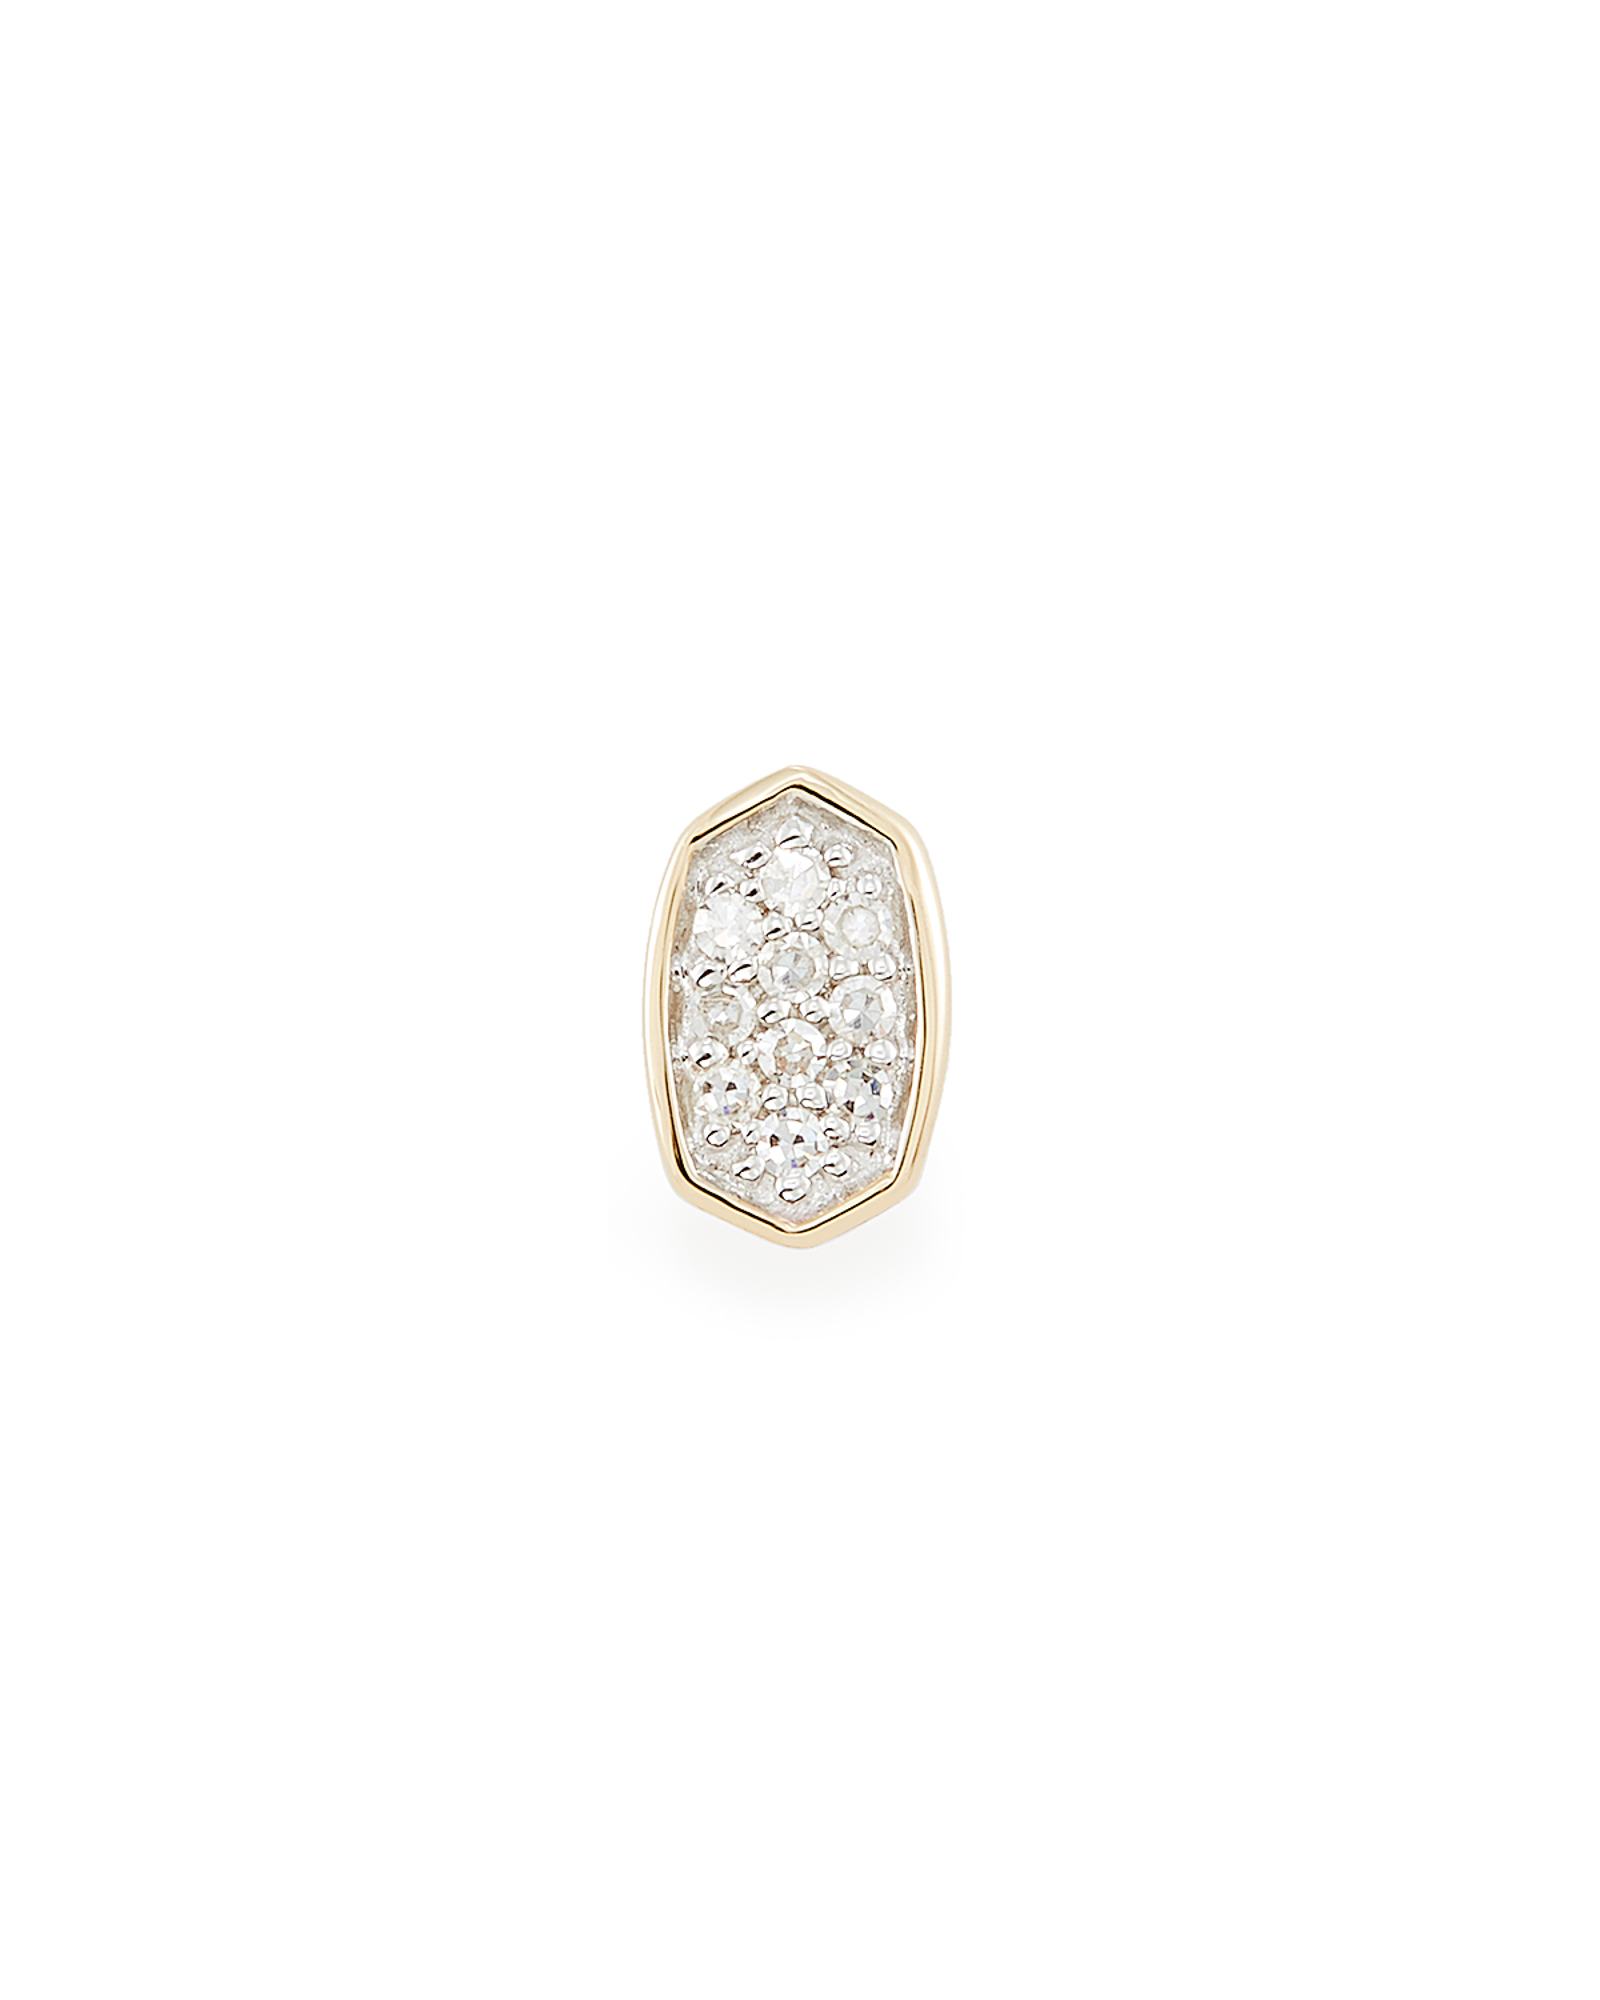 Marisa Mini 14K Yellow Gold Stud Earring in White Diamond | Kendra Scott